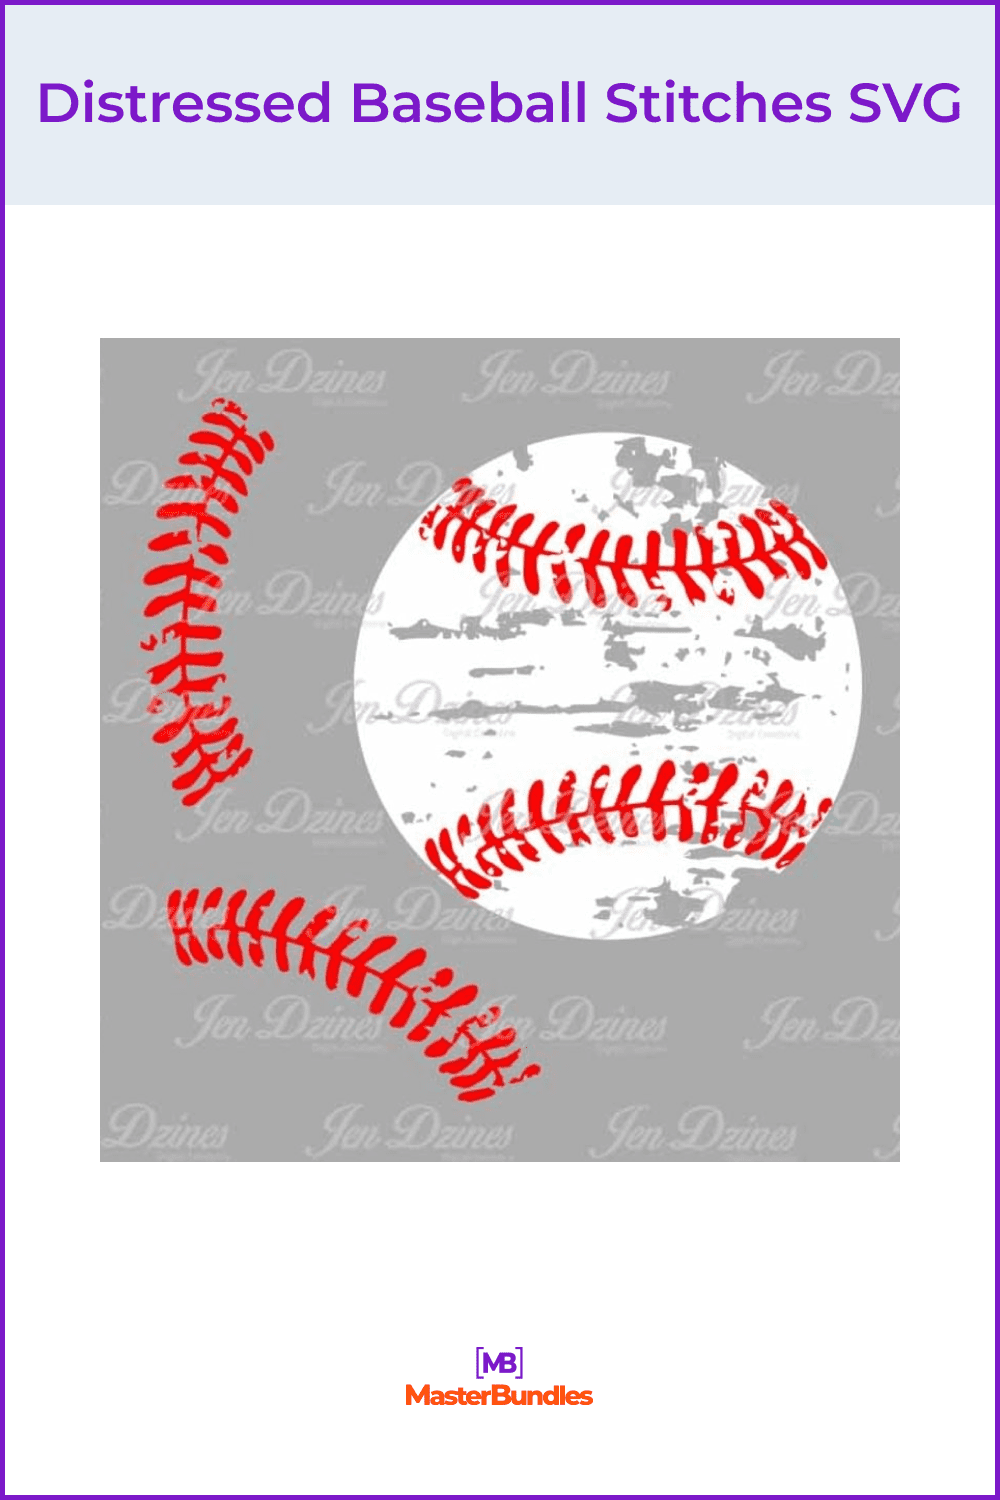 Distressed Baseball Stitches SVG.